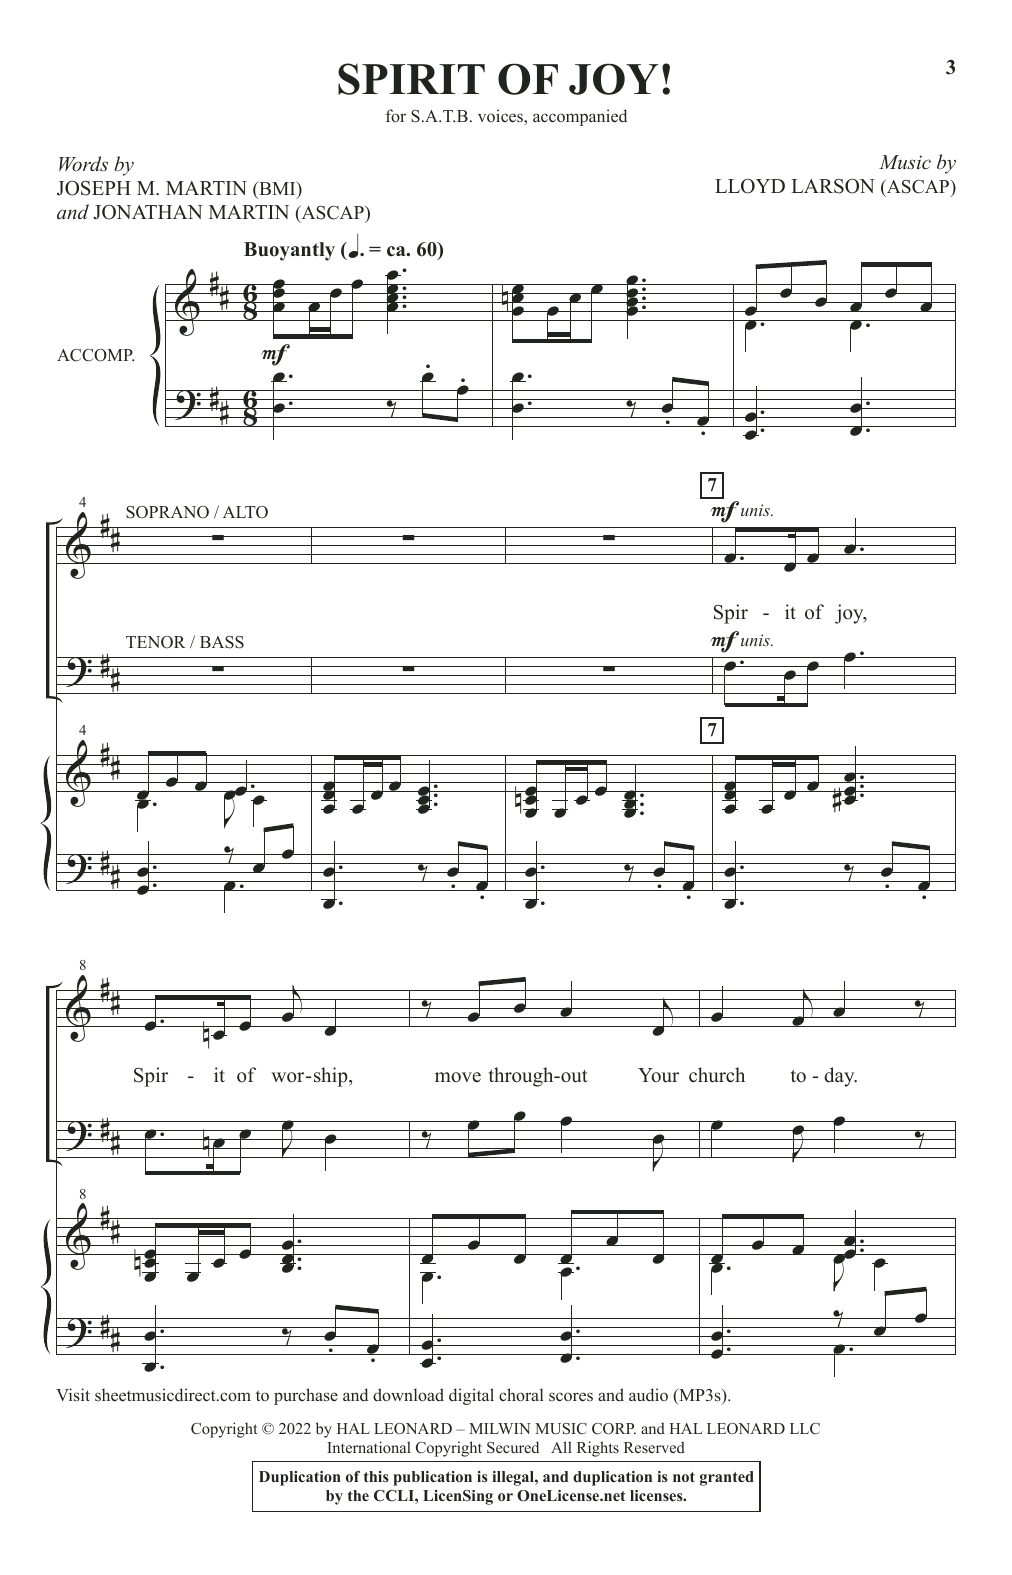 Download Joseph M. Martin, Jonathan Martin and Lloyd Larson Spirit Of Joy! Sheet Music and learn how to play SATB Choir PDF digital score in minutes